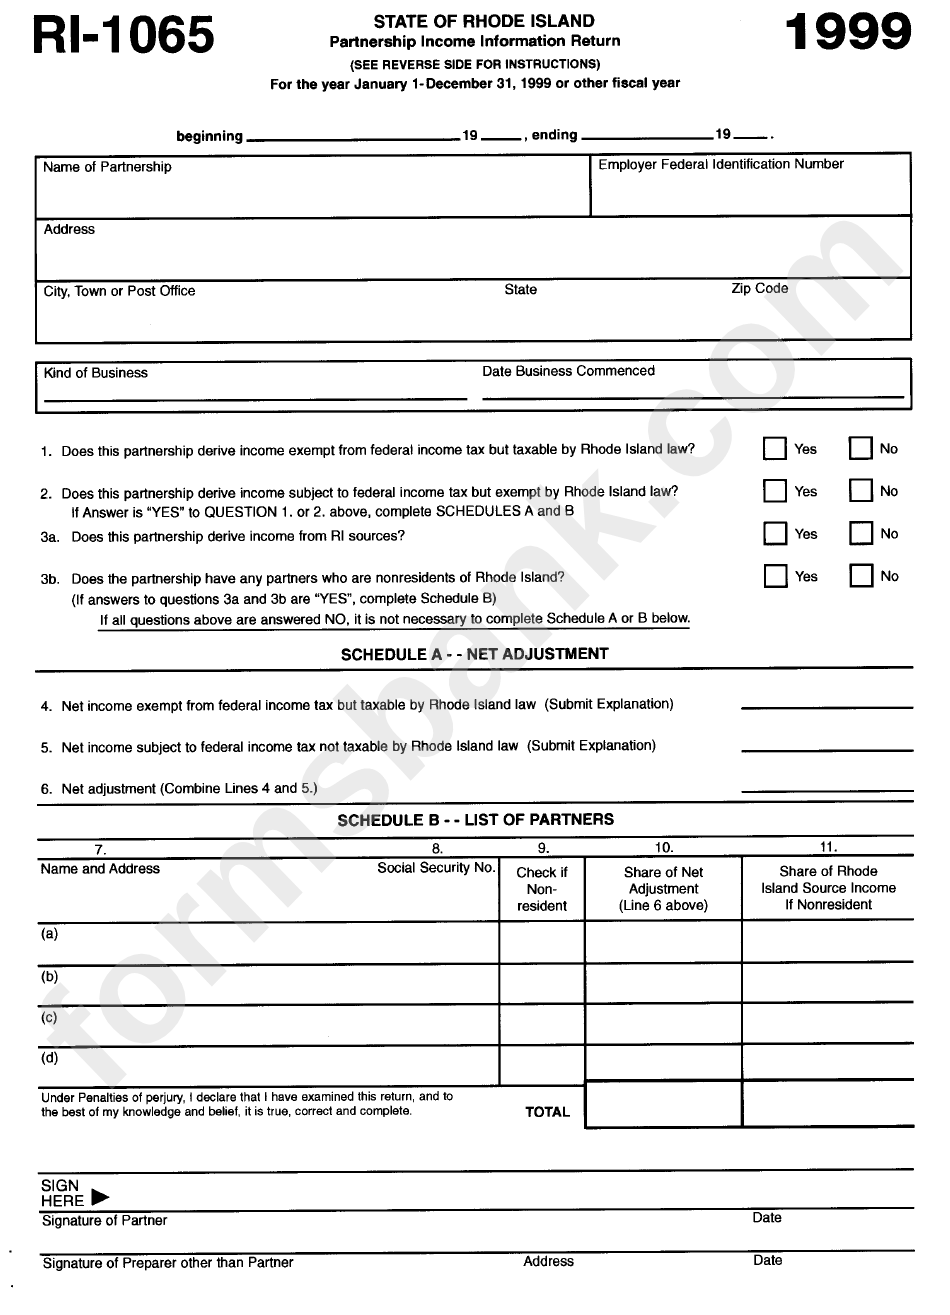 Form Ri-1065 - Partnership Income Information Return - 1999